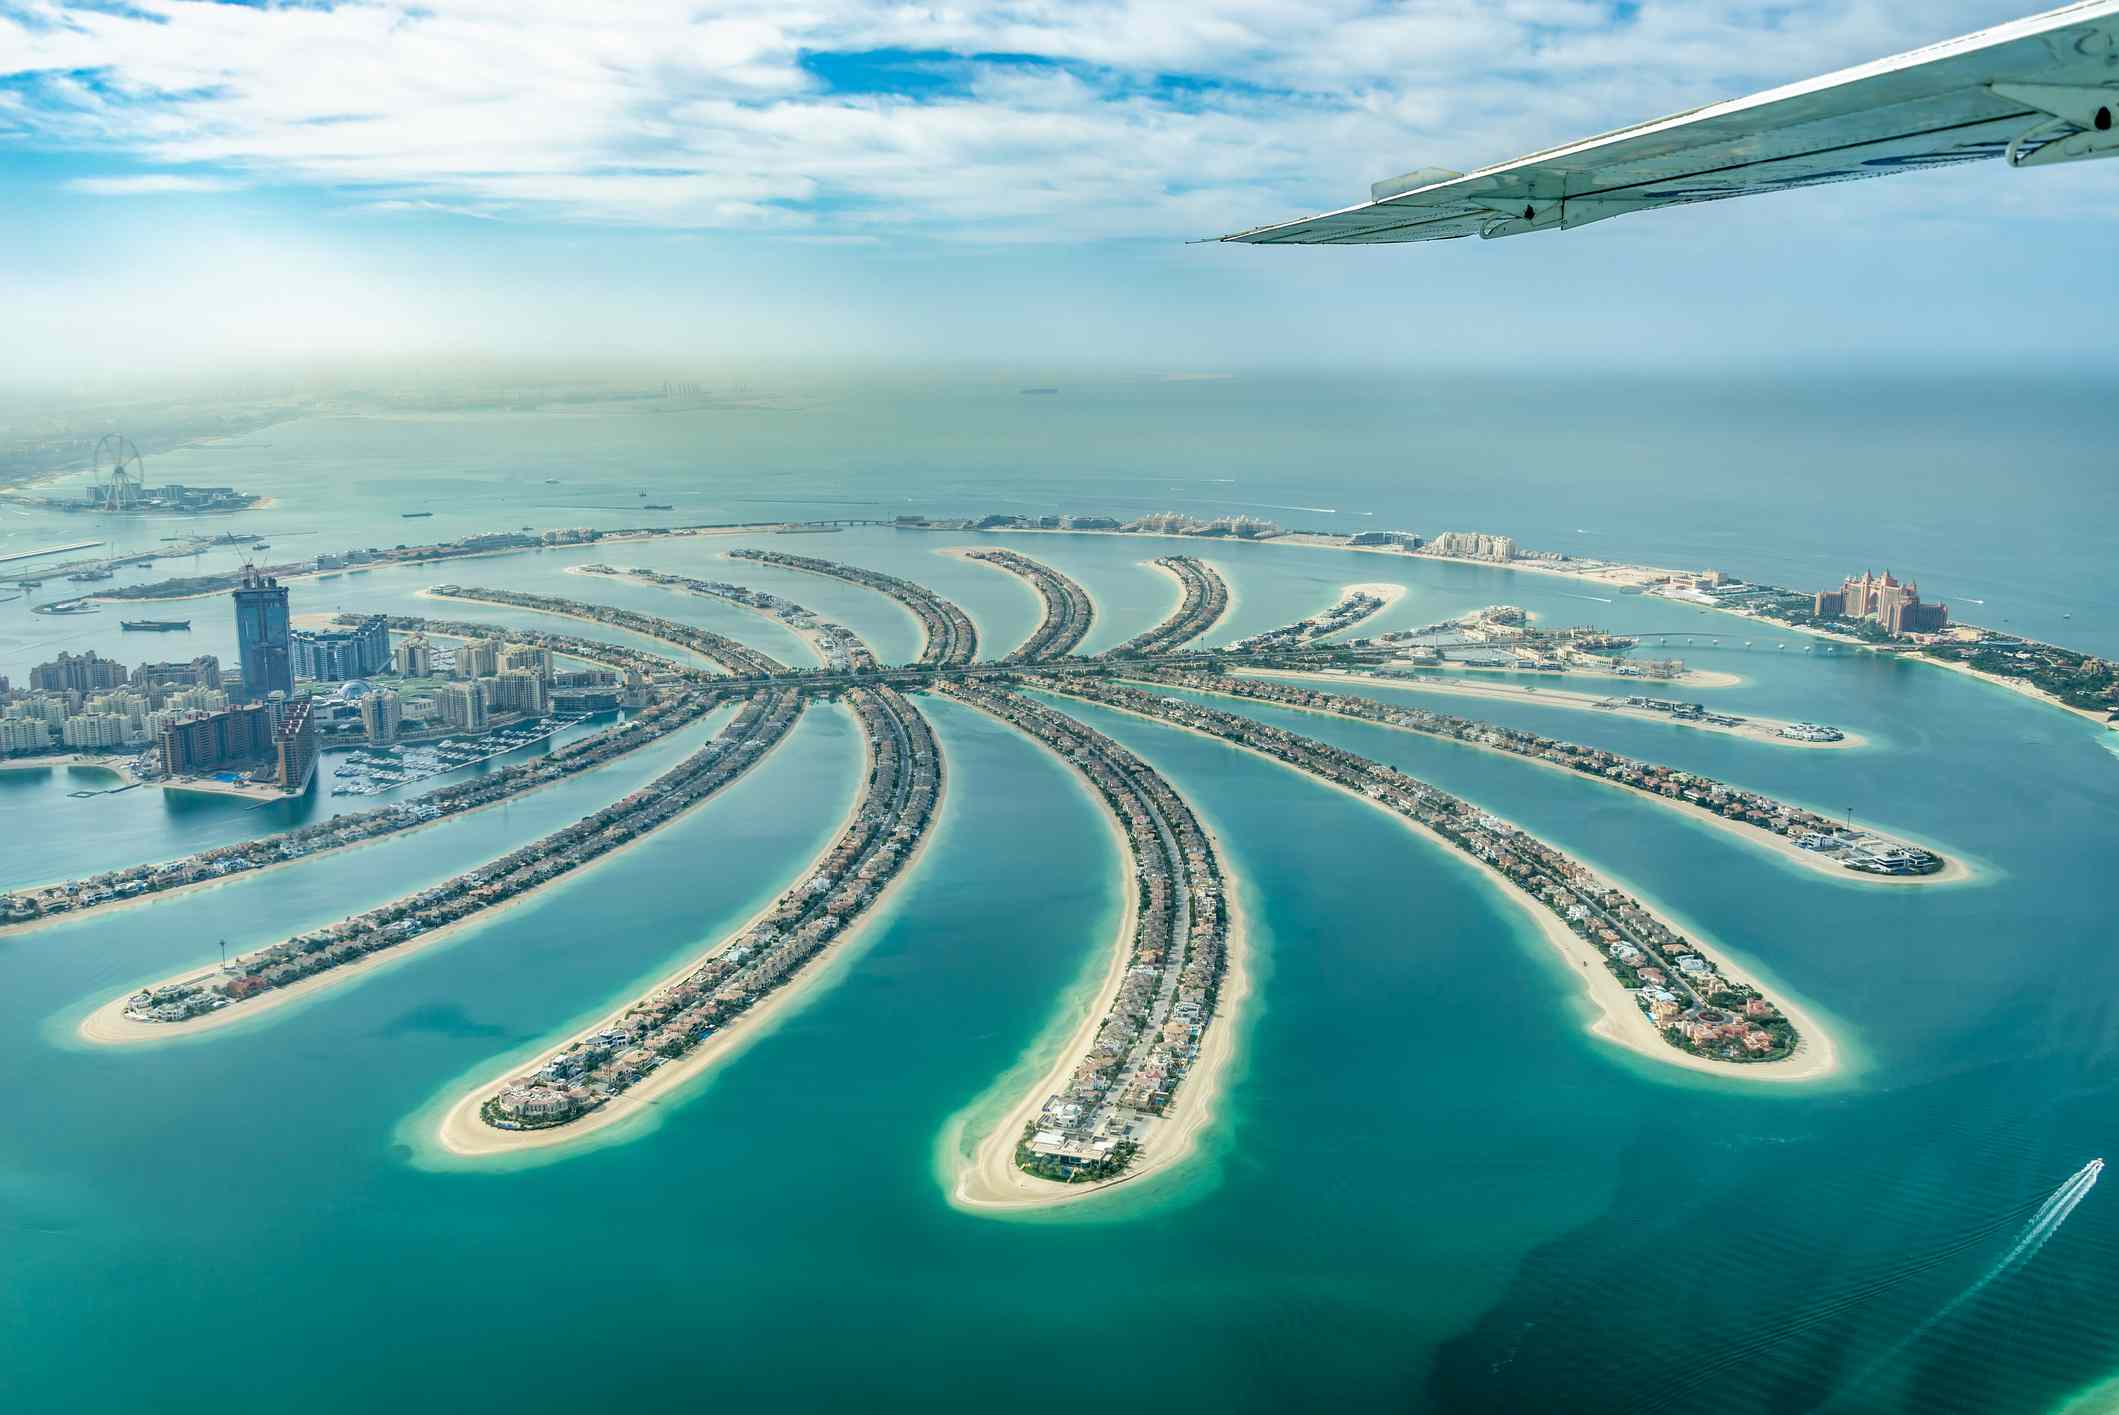 Vista aérea de la isla Palm Jumeirah de Dubai en los Emiratos Árabes Unidos